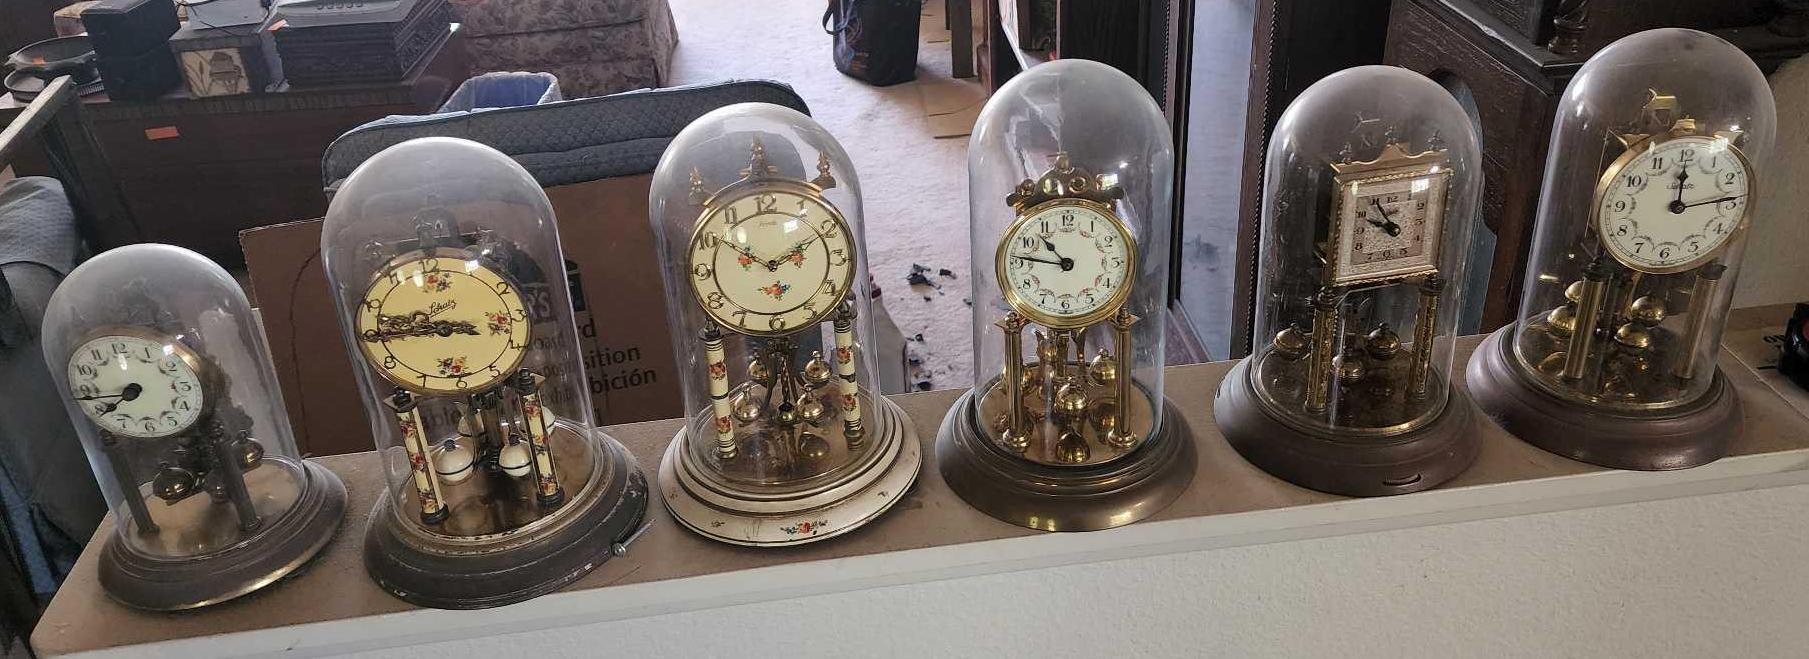 6 units anniversary clocks schatz kundo